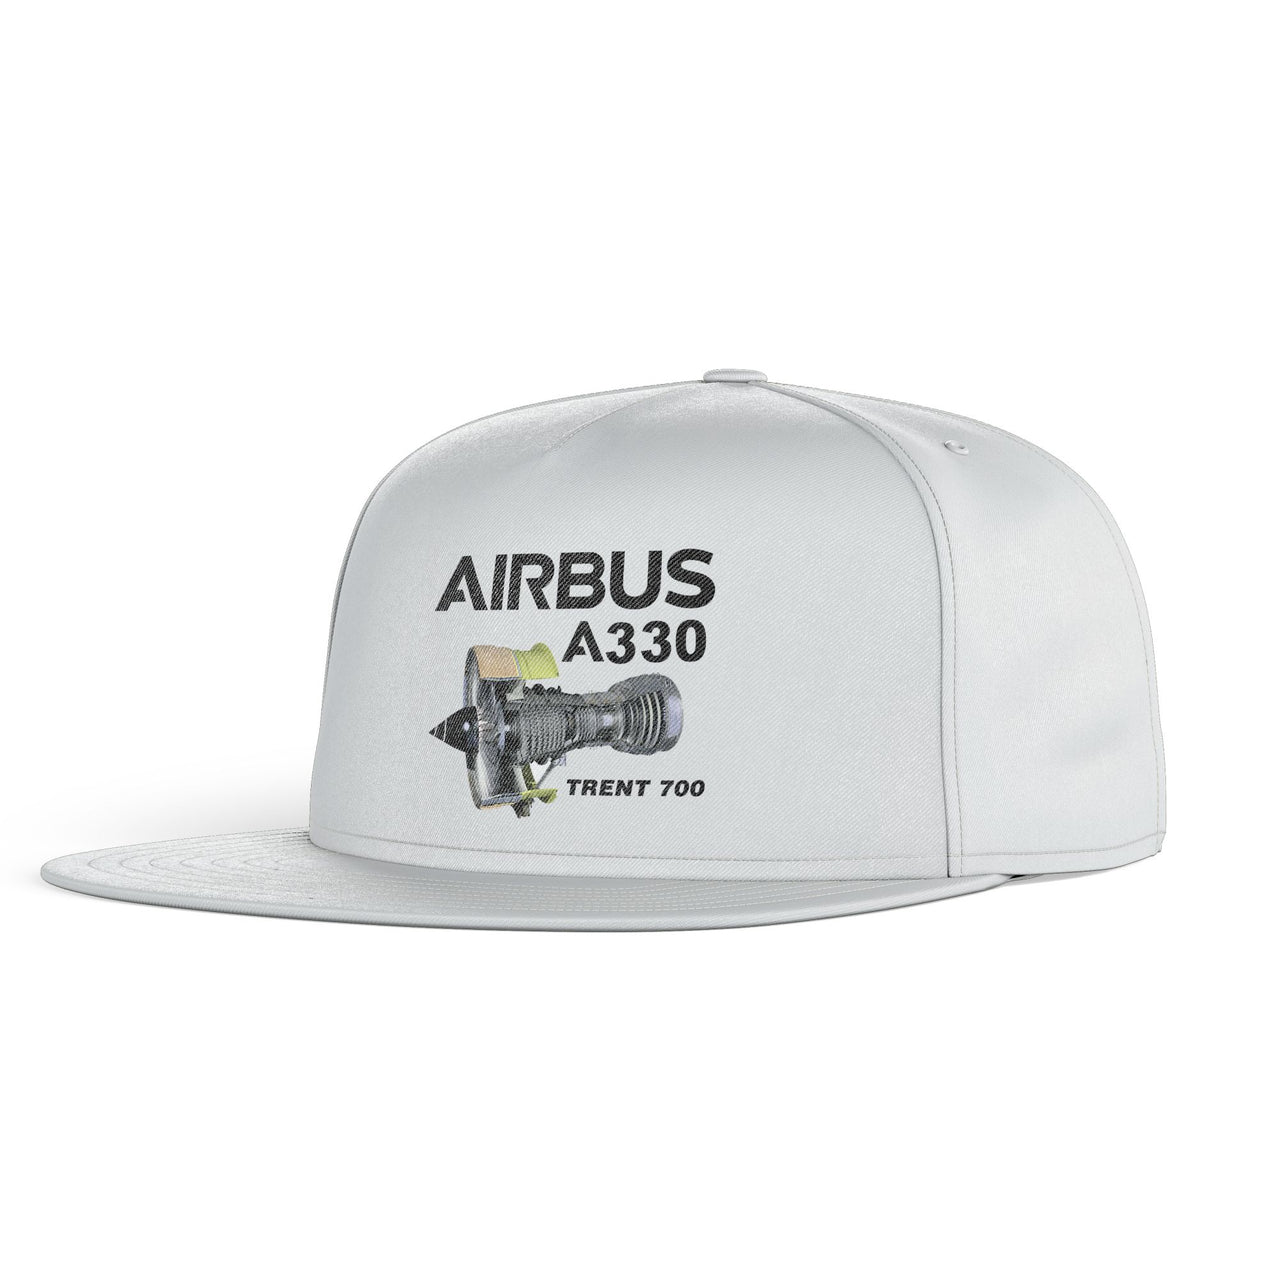 Airbus A330 & Trent 700 Engine Designed Snapback Caps & Hats